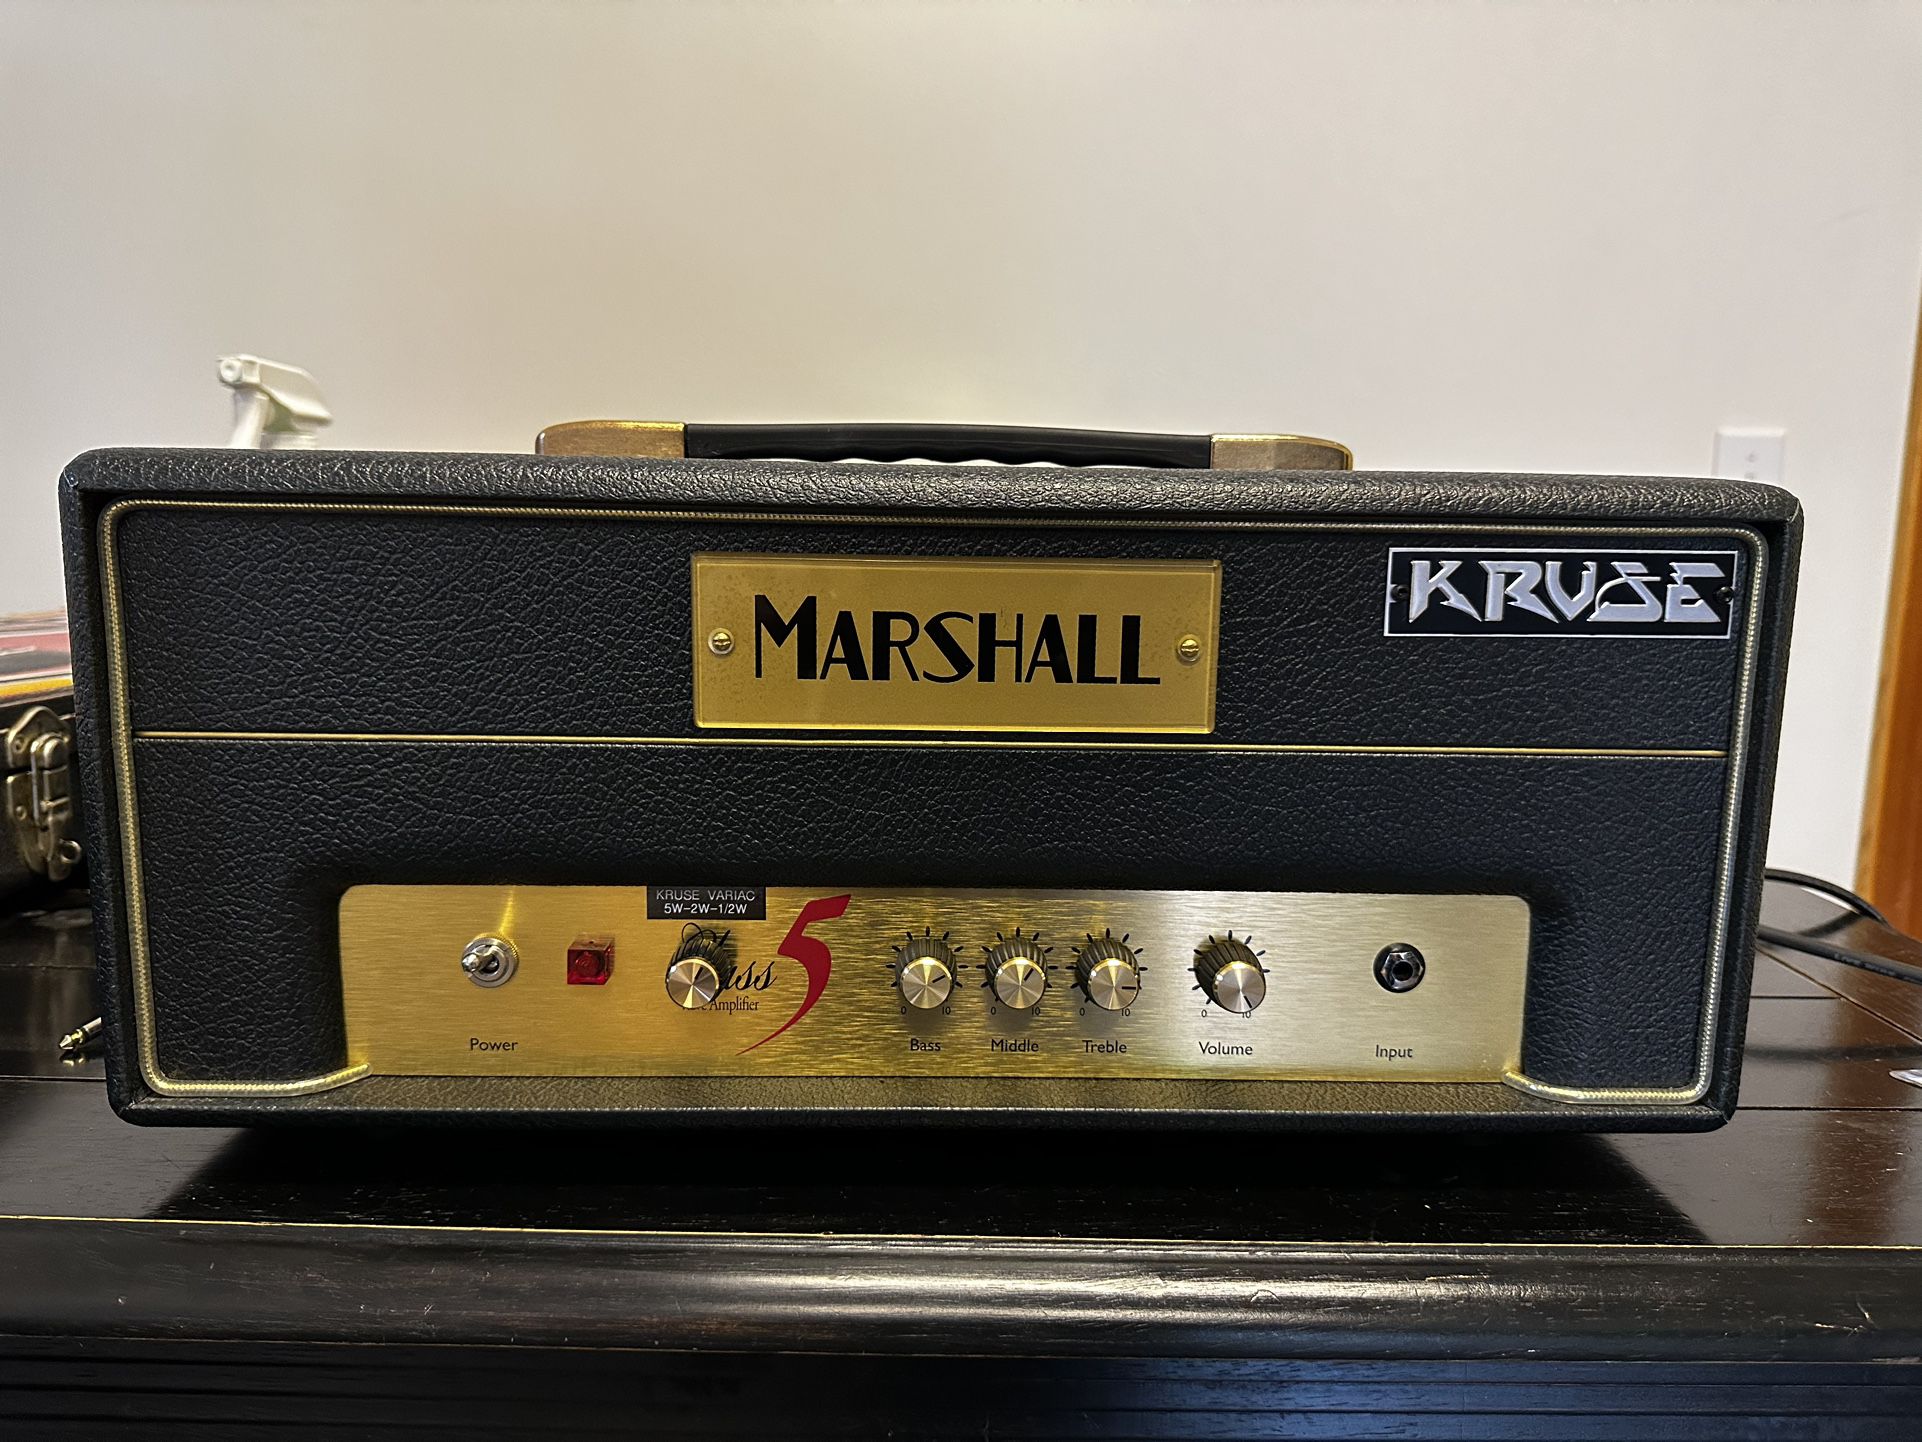 Marshall Class 5 Kruse Brown Sound Modded! 